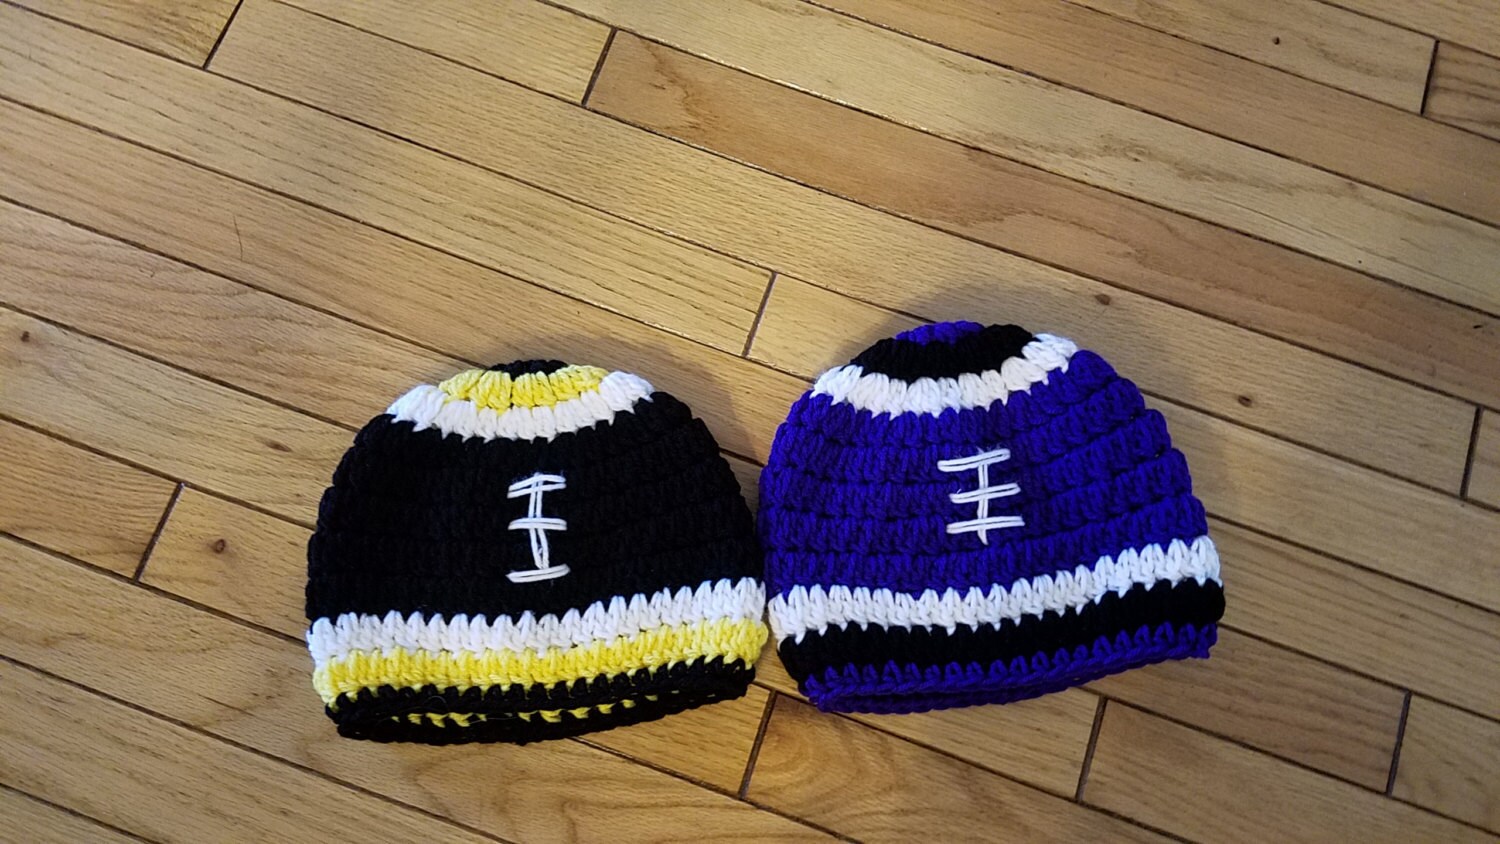 Crochet Football Hat Pattern Sizes Newborn to Adult - Etsy